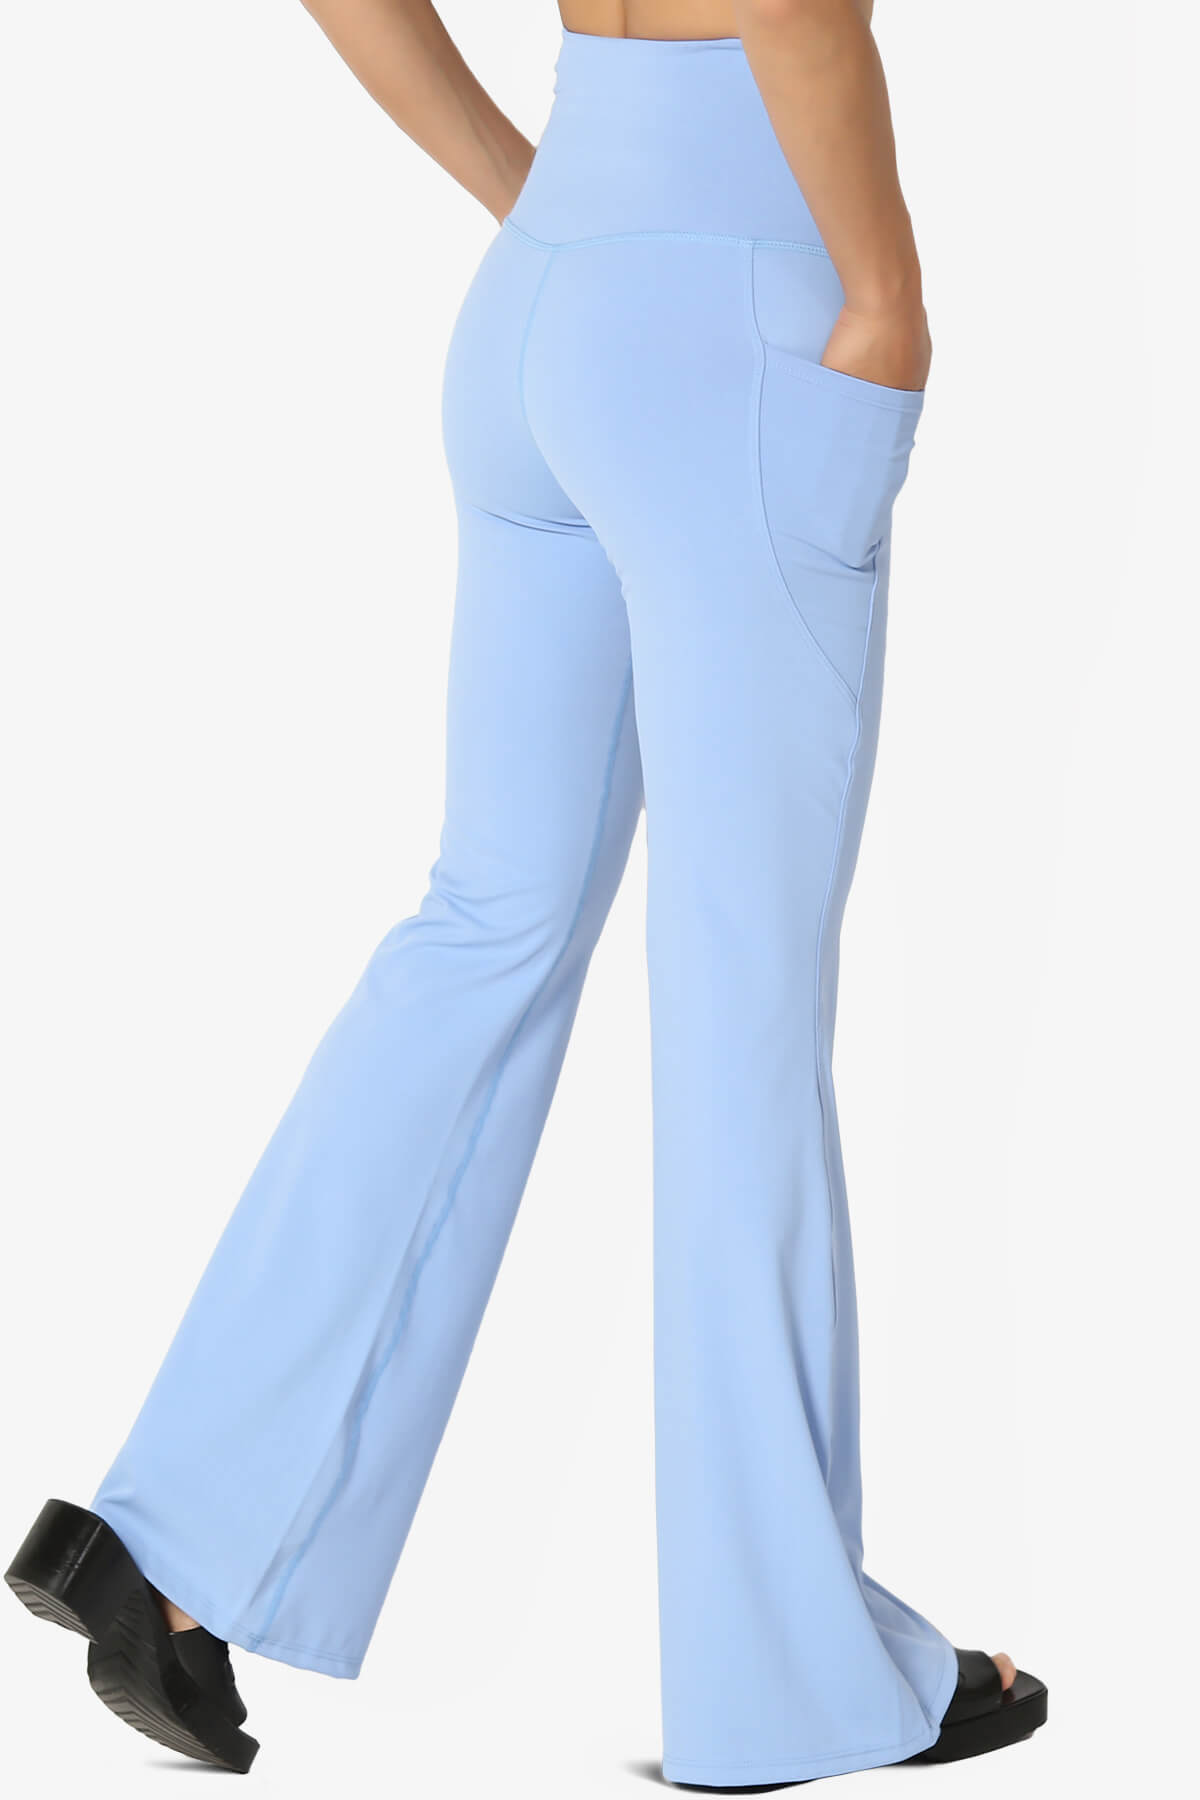 Gemma Athletic Pocket Flare Yoga Pants CREAM BLUE_4